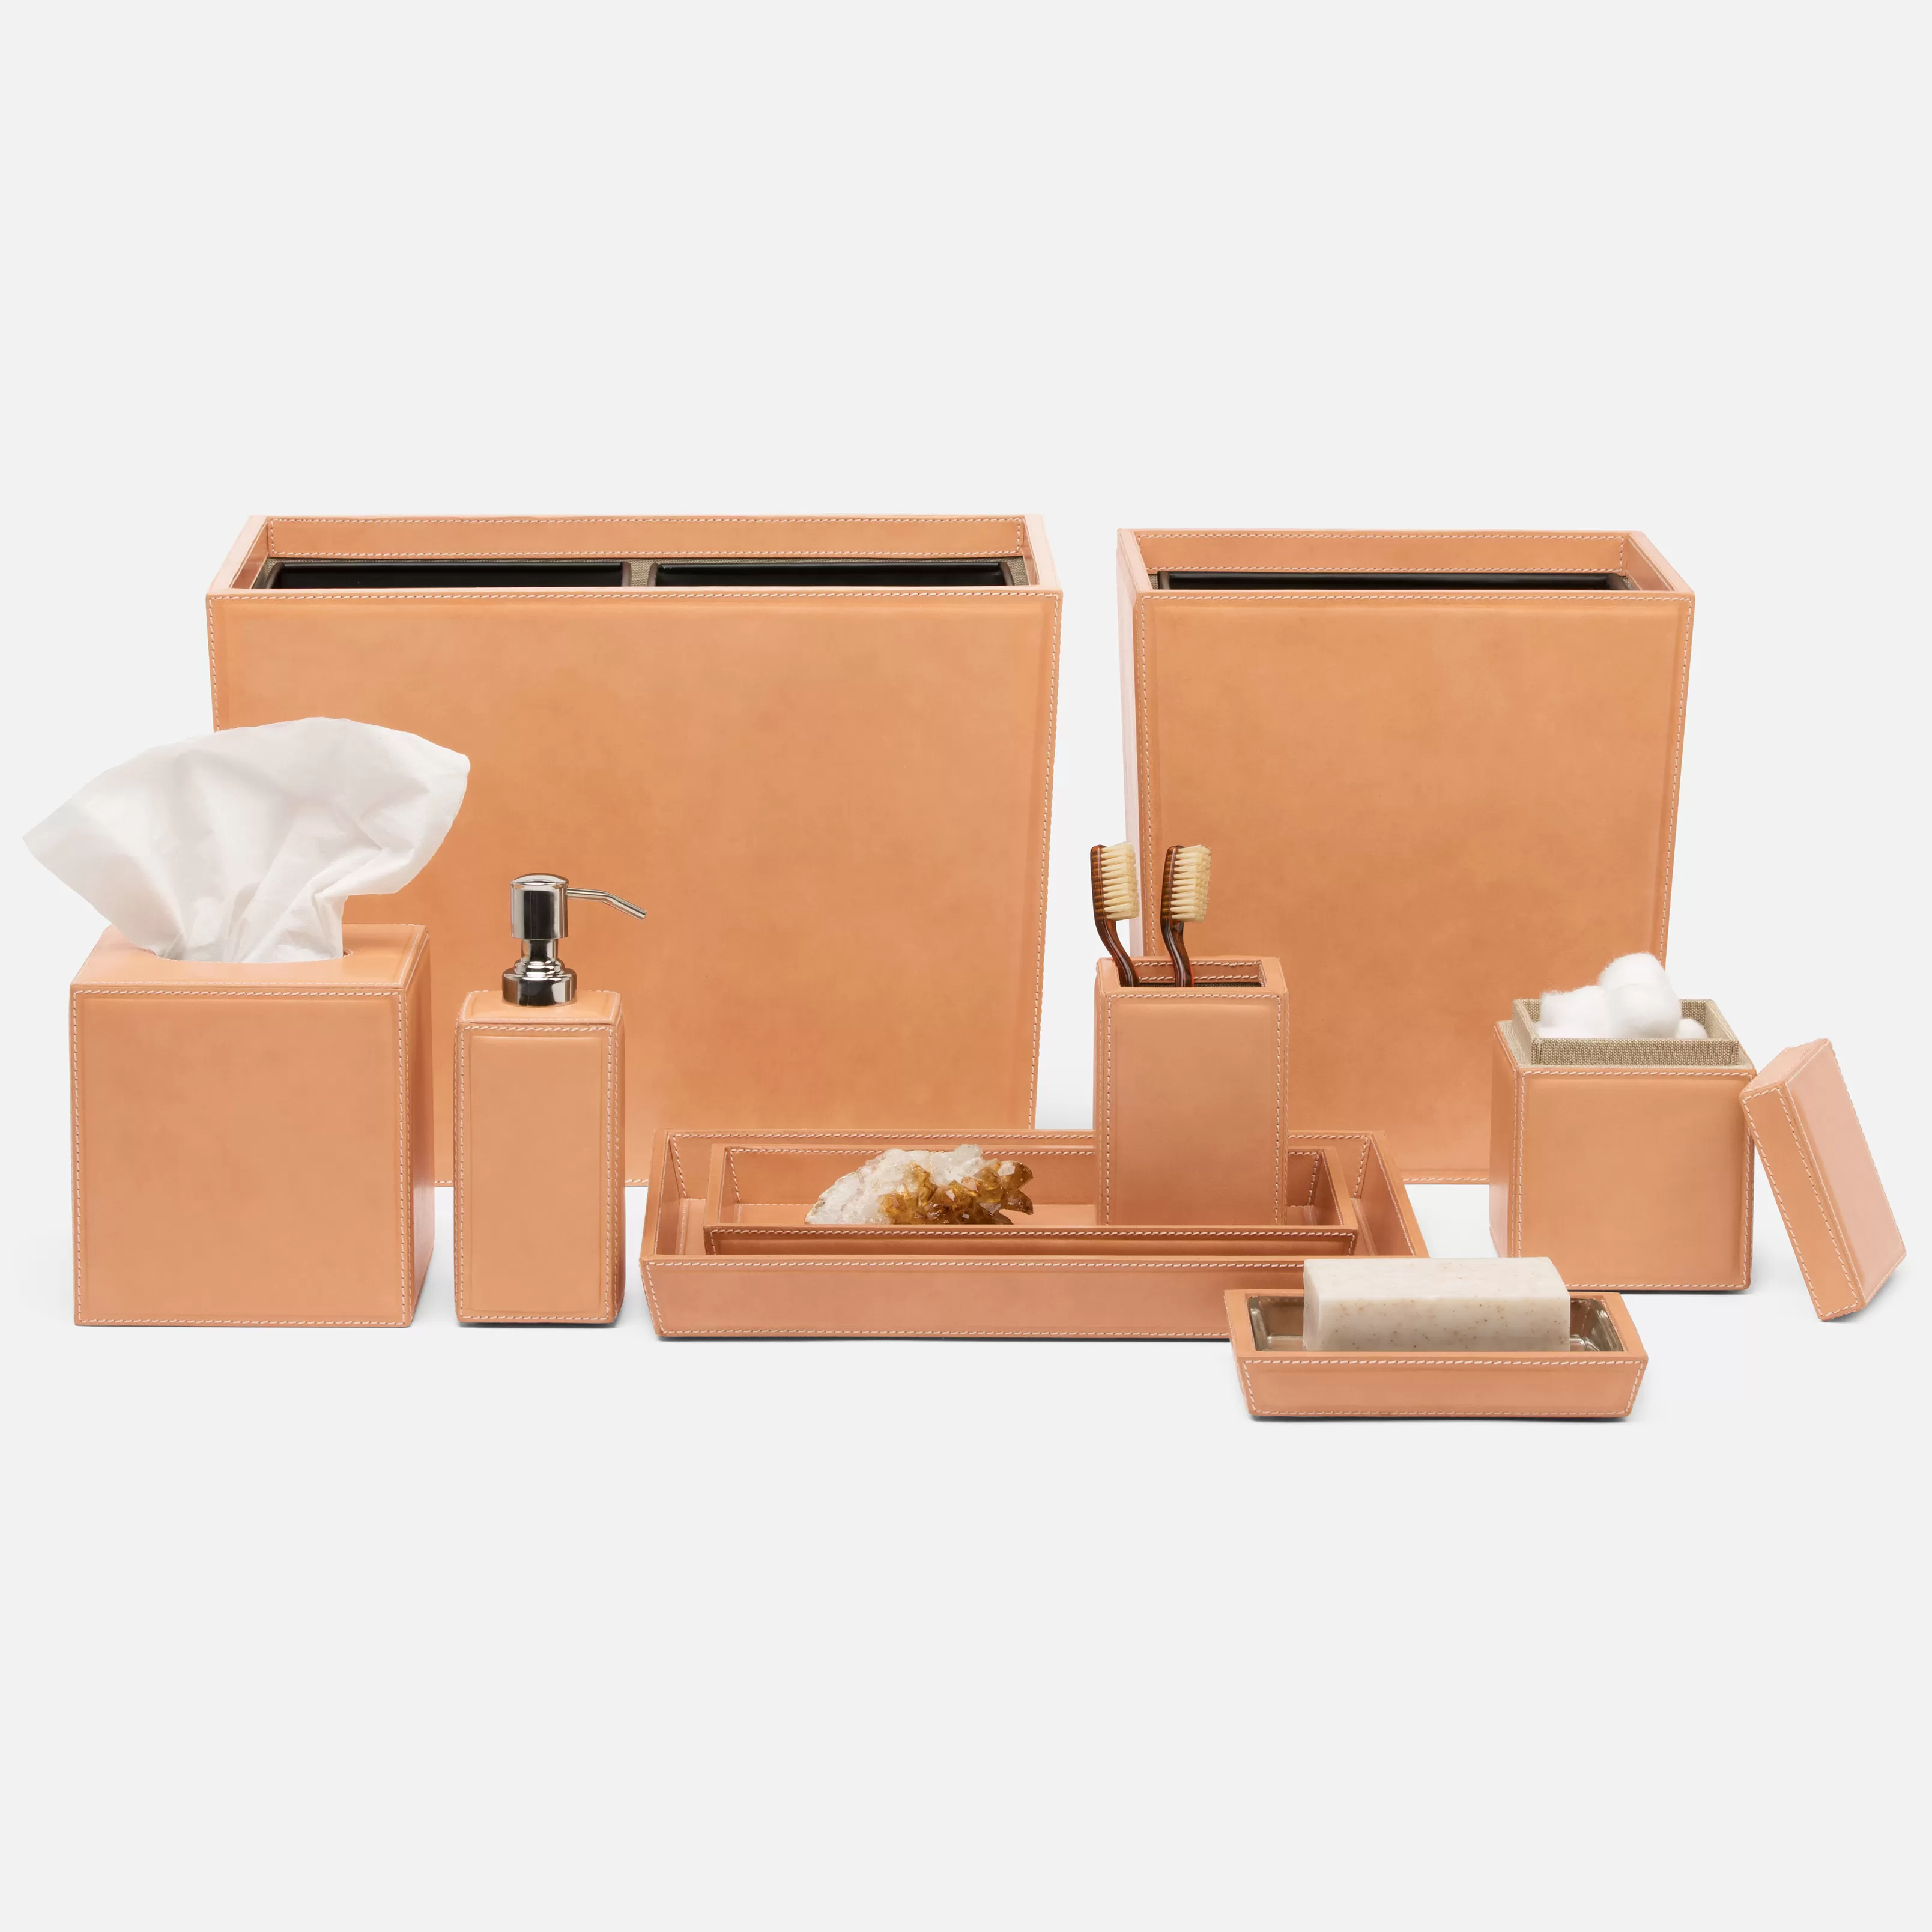 tissue box covers $25  Louis vuitton, Tissue boxes, Vuitton